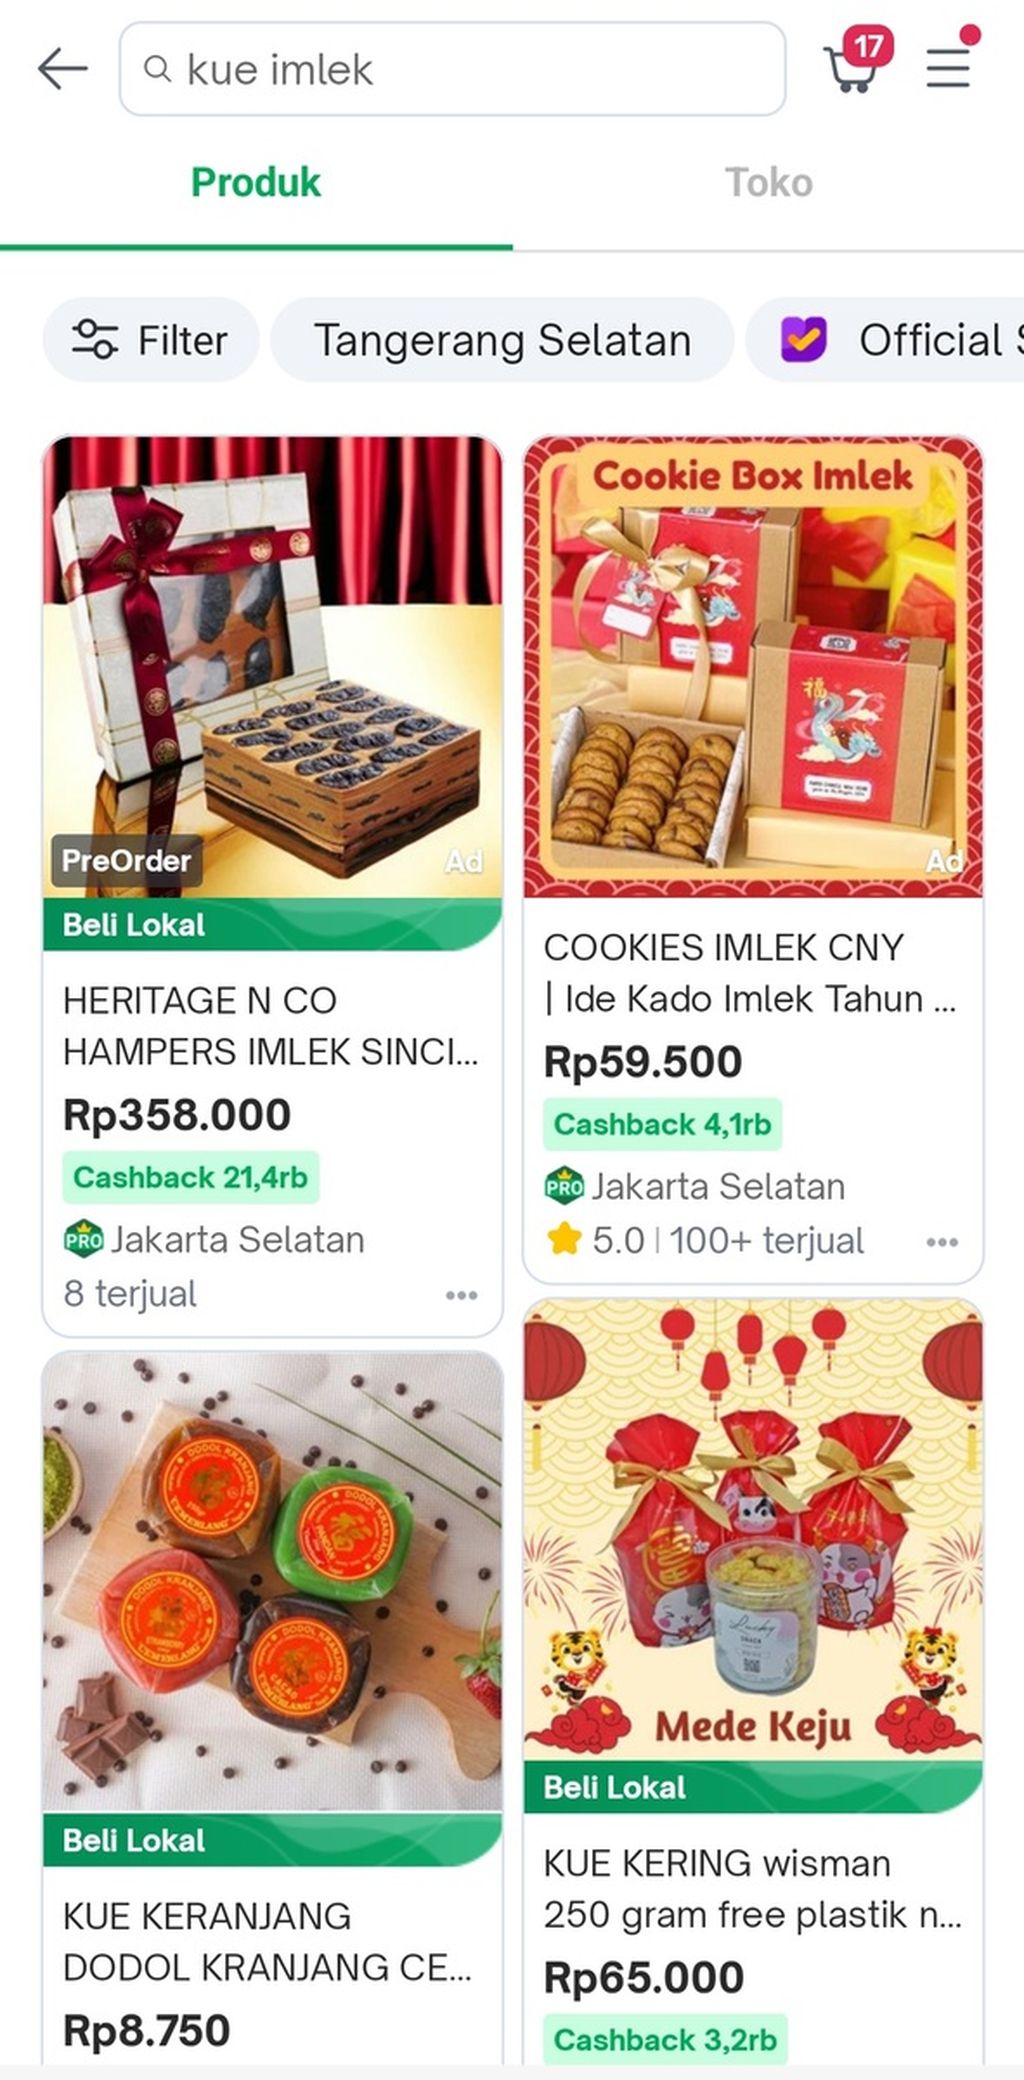 Tangkapan layar dari ponsel mengenai berbagai kue imlek yang dijual di lokapasar toko daring.